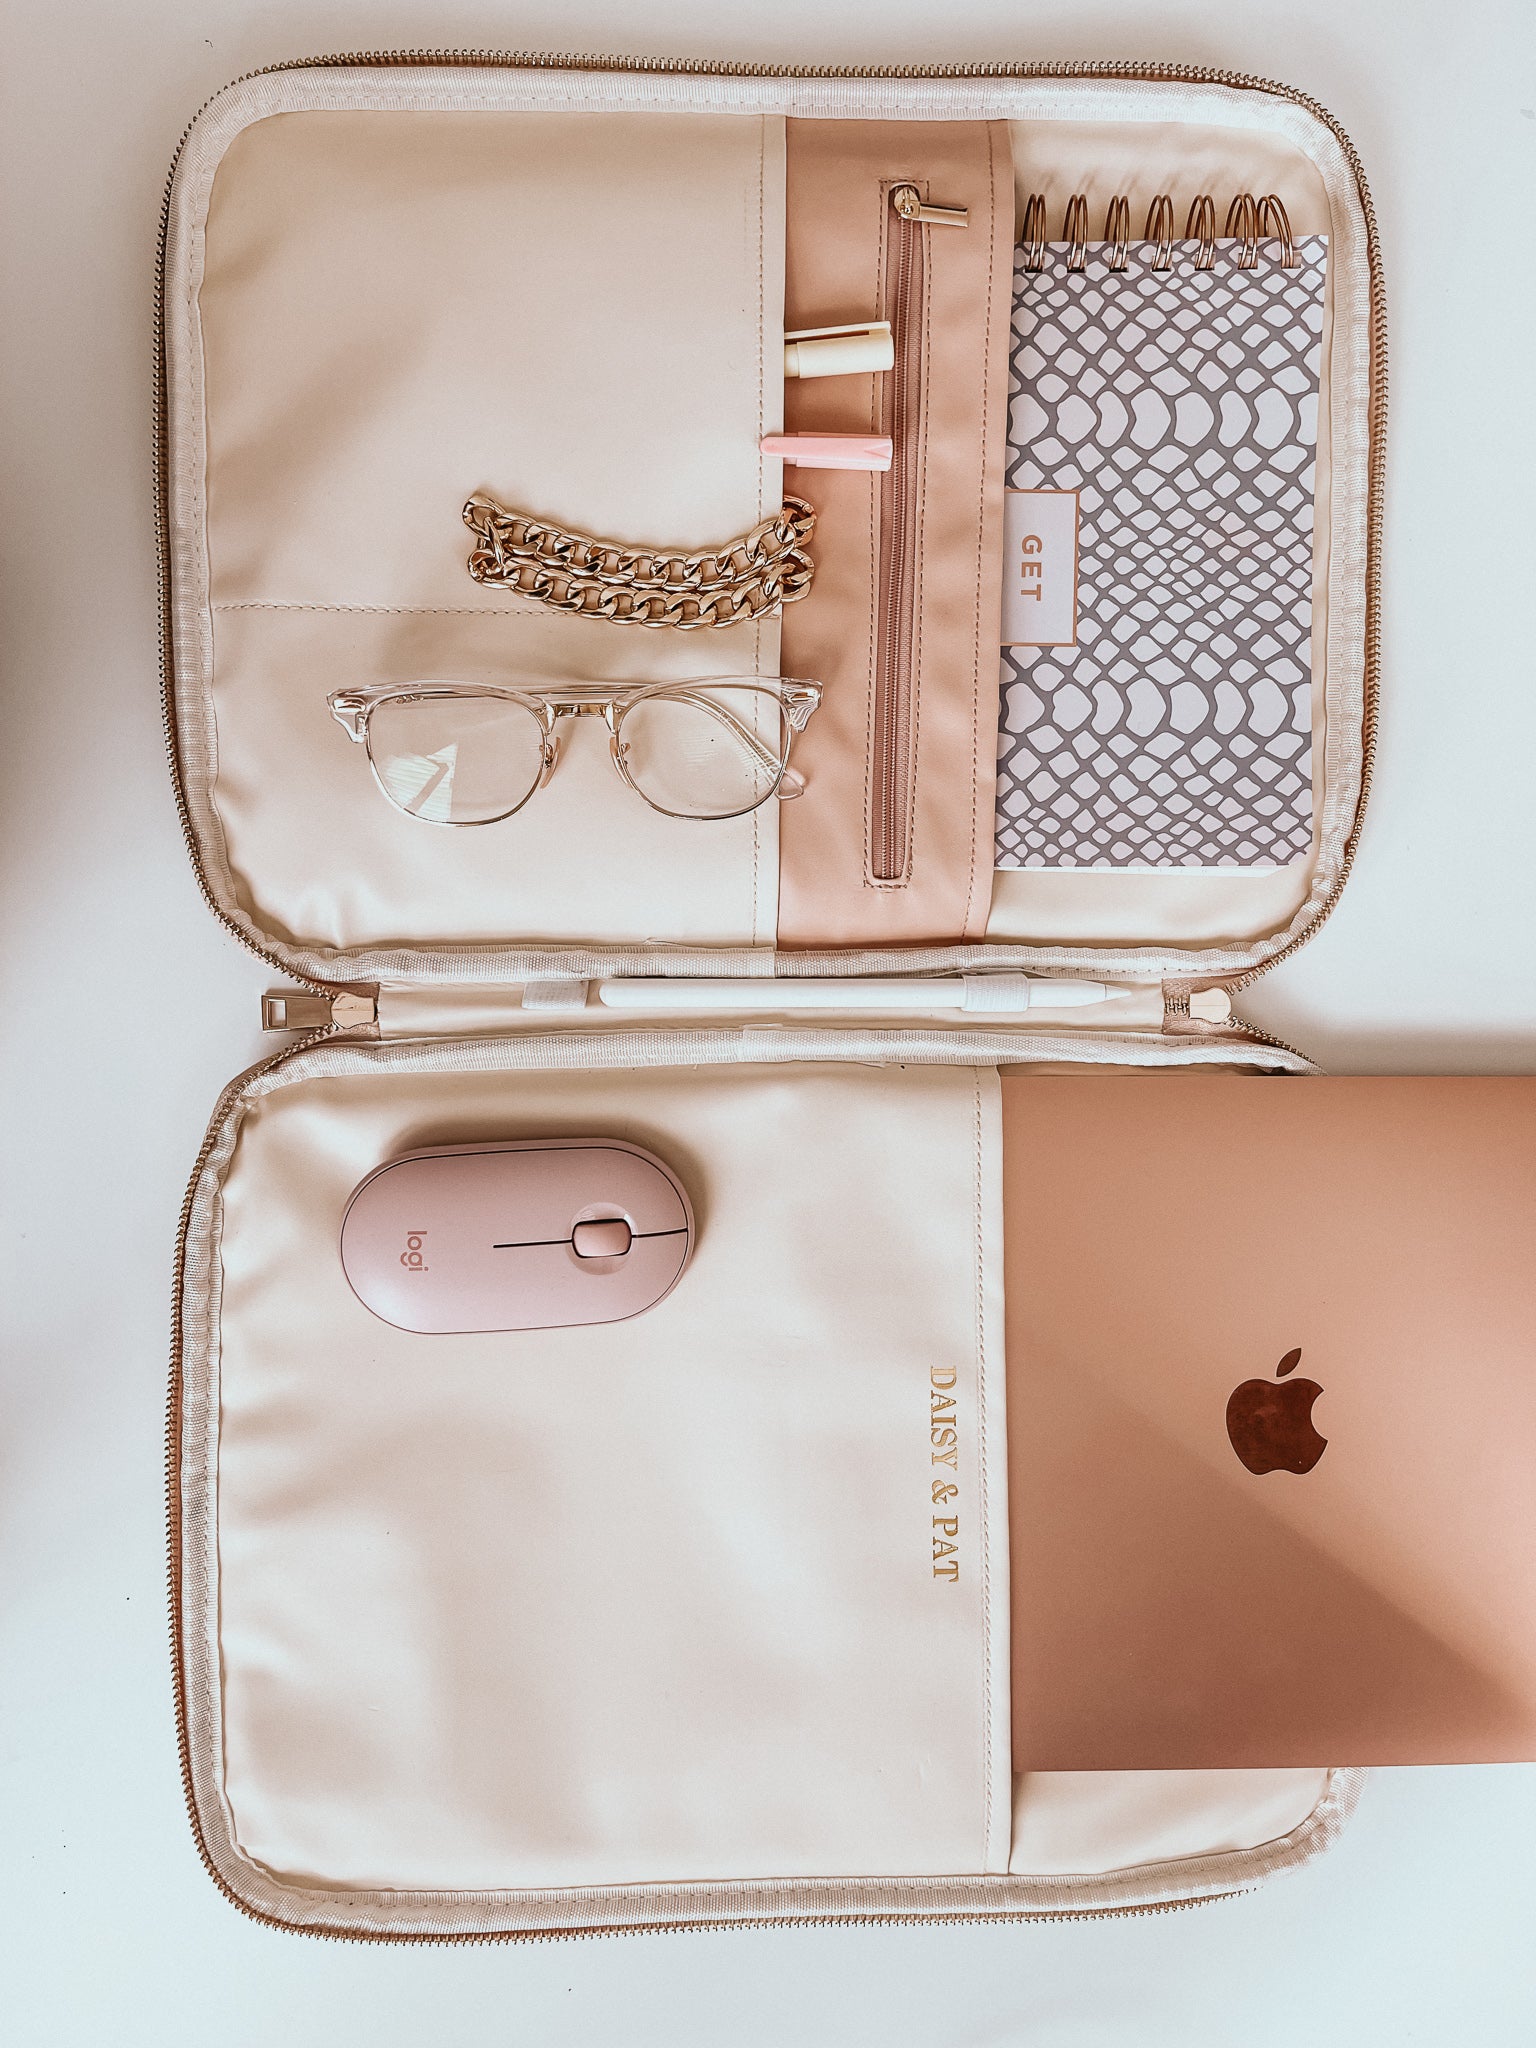 DAISY & PAT | Travel laptop case | macbook sleeve | macbook case | trendy macbook case | aesthetic macbook case | trendy laptop sleeve 